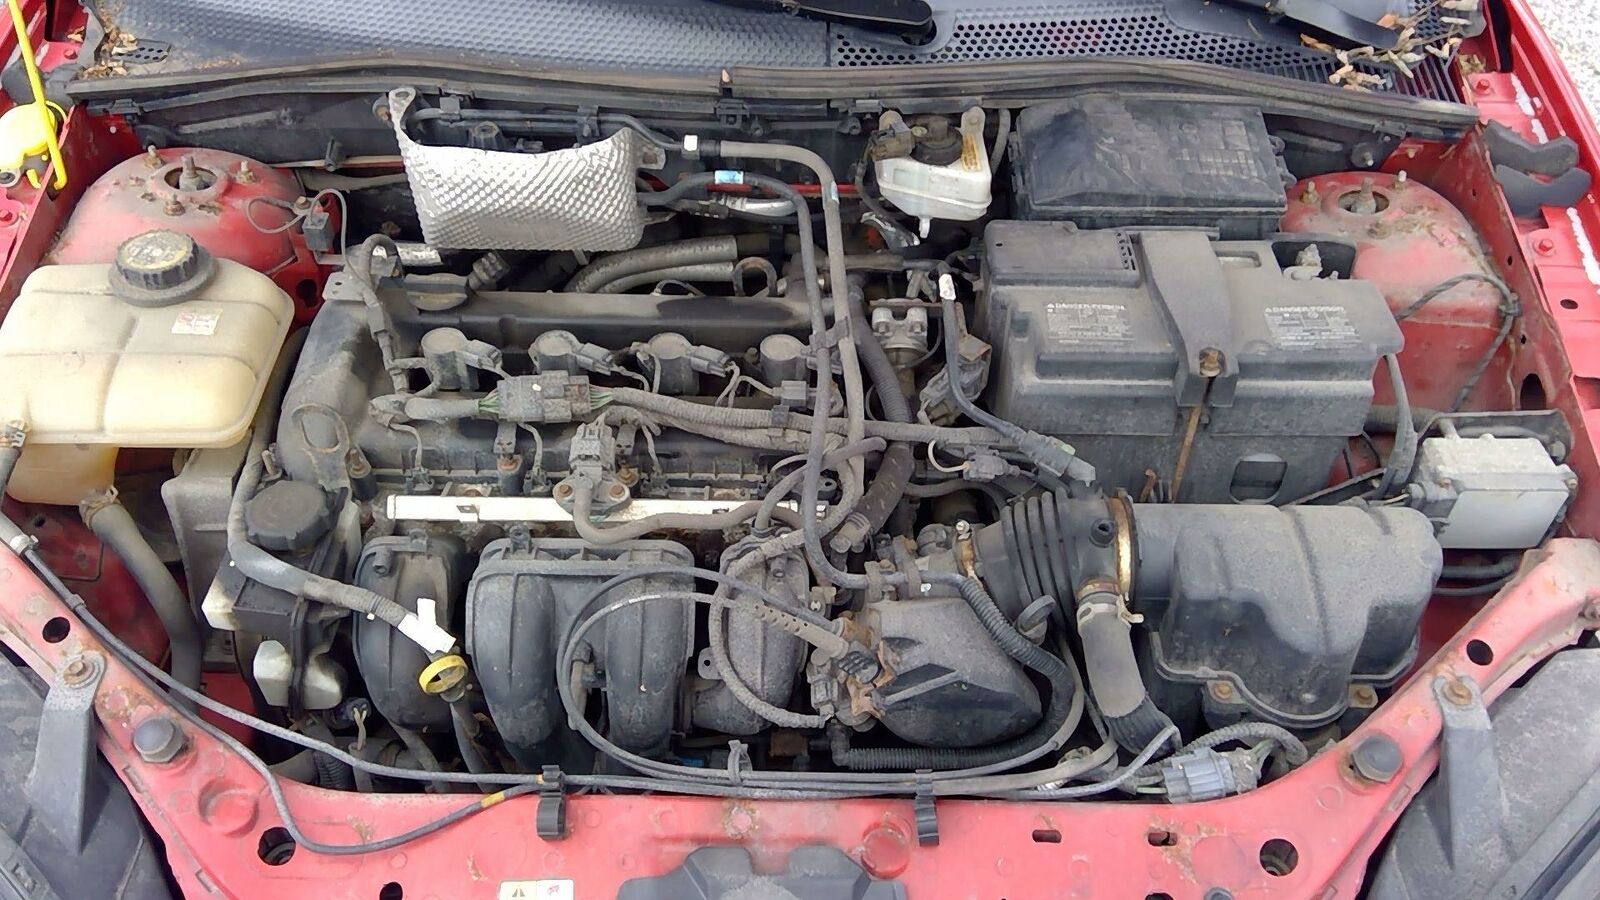 2005 - 2007 FORD FOCUS Engine Motor 2.0L (VIN N 8th Digit) DOHC | eBay